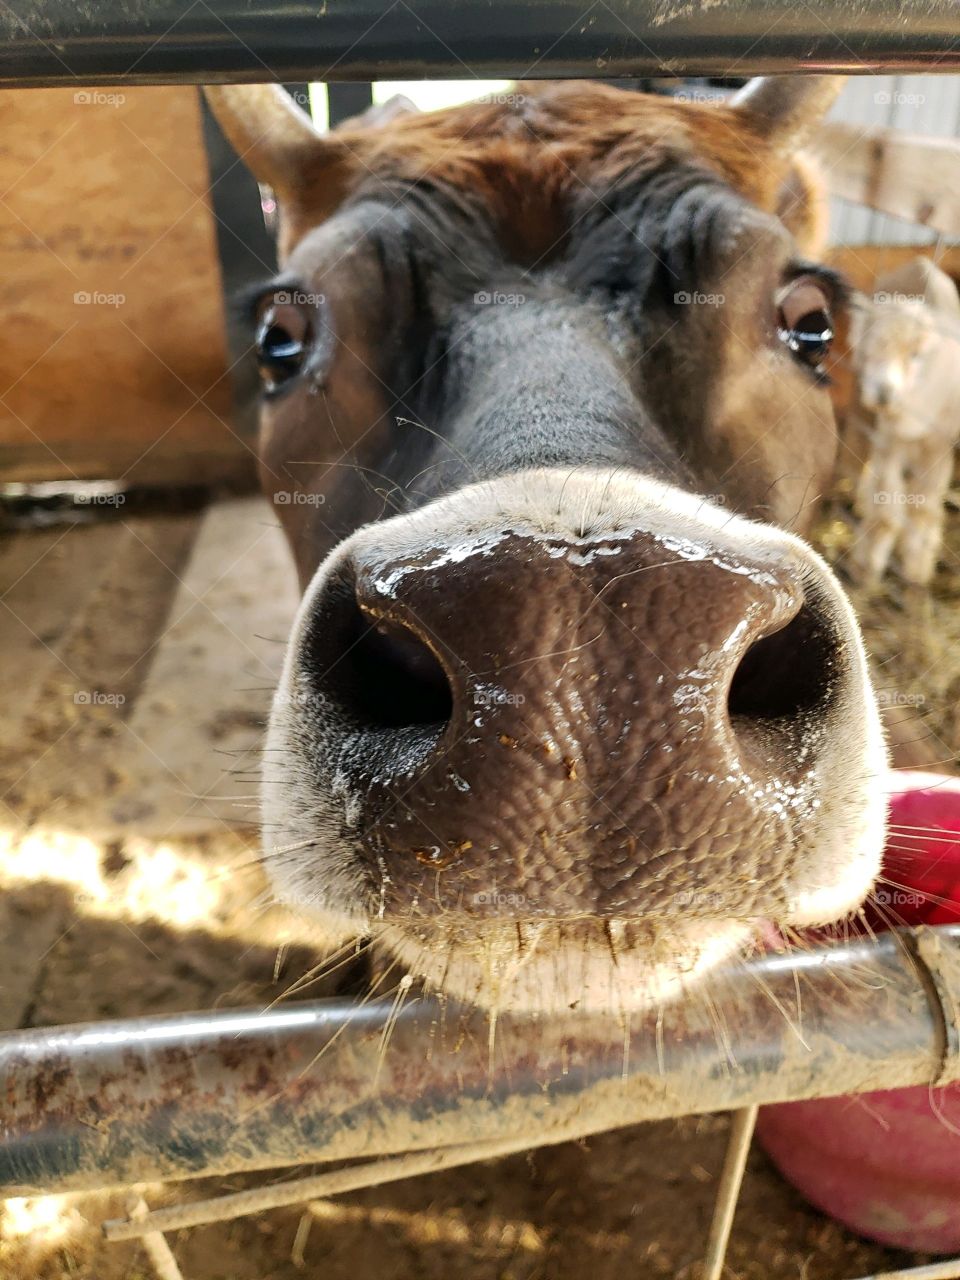 Cow nose 